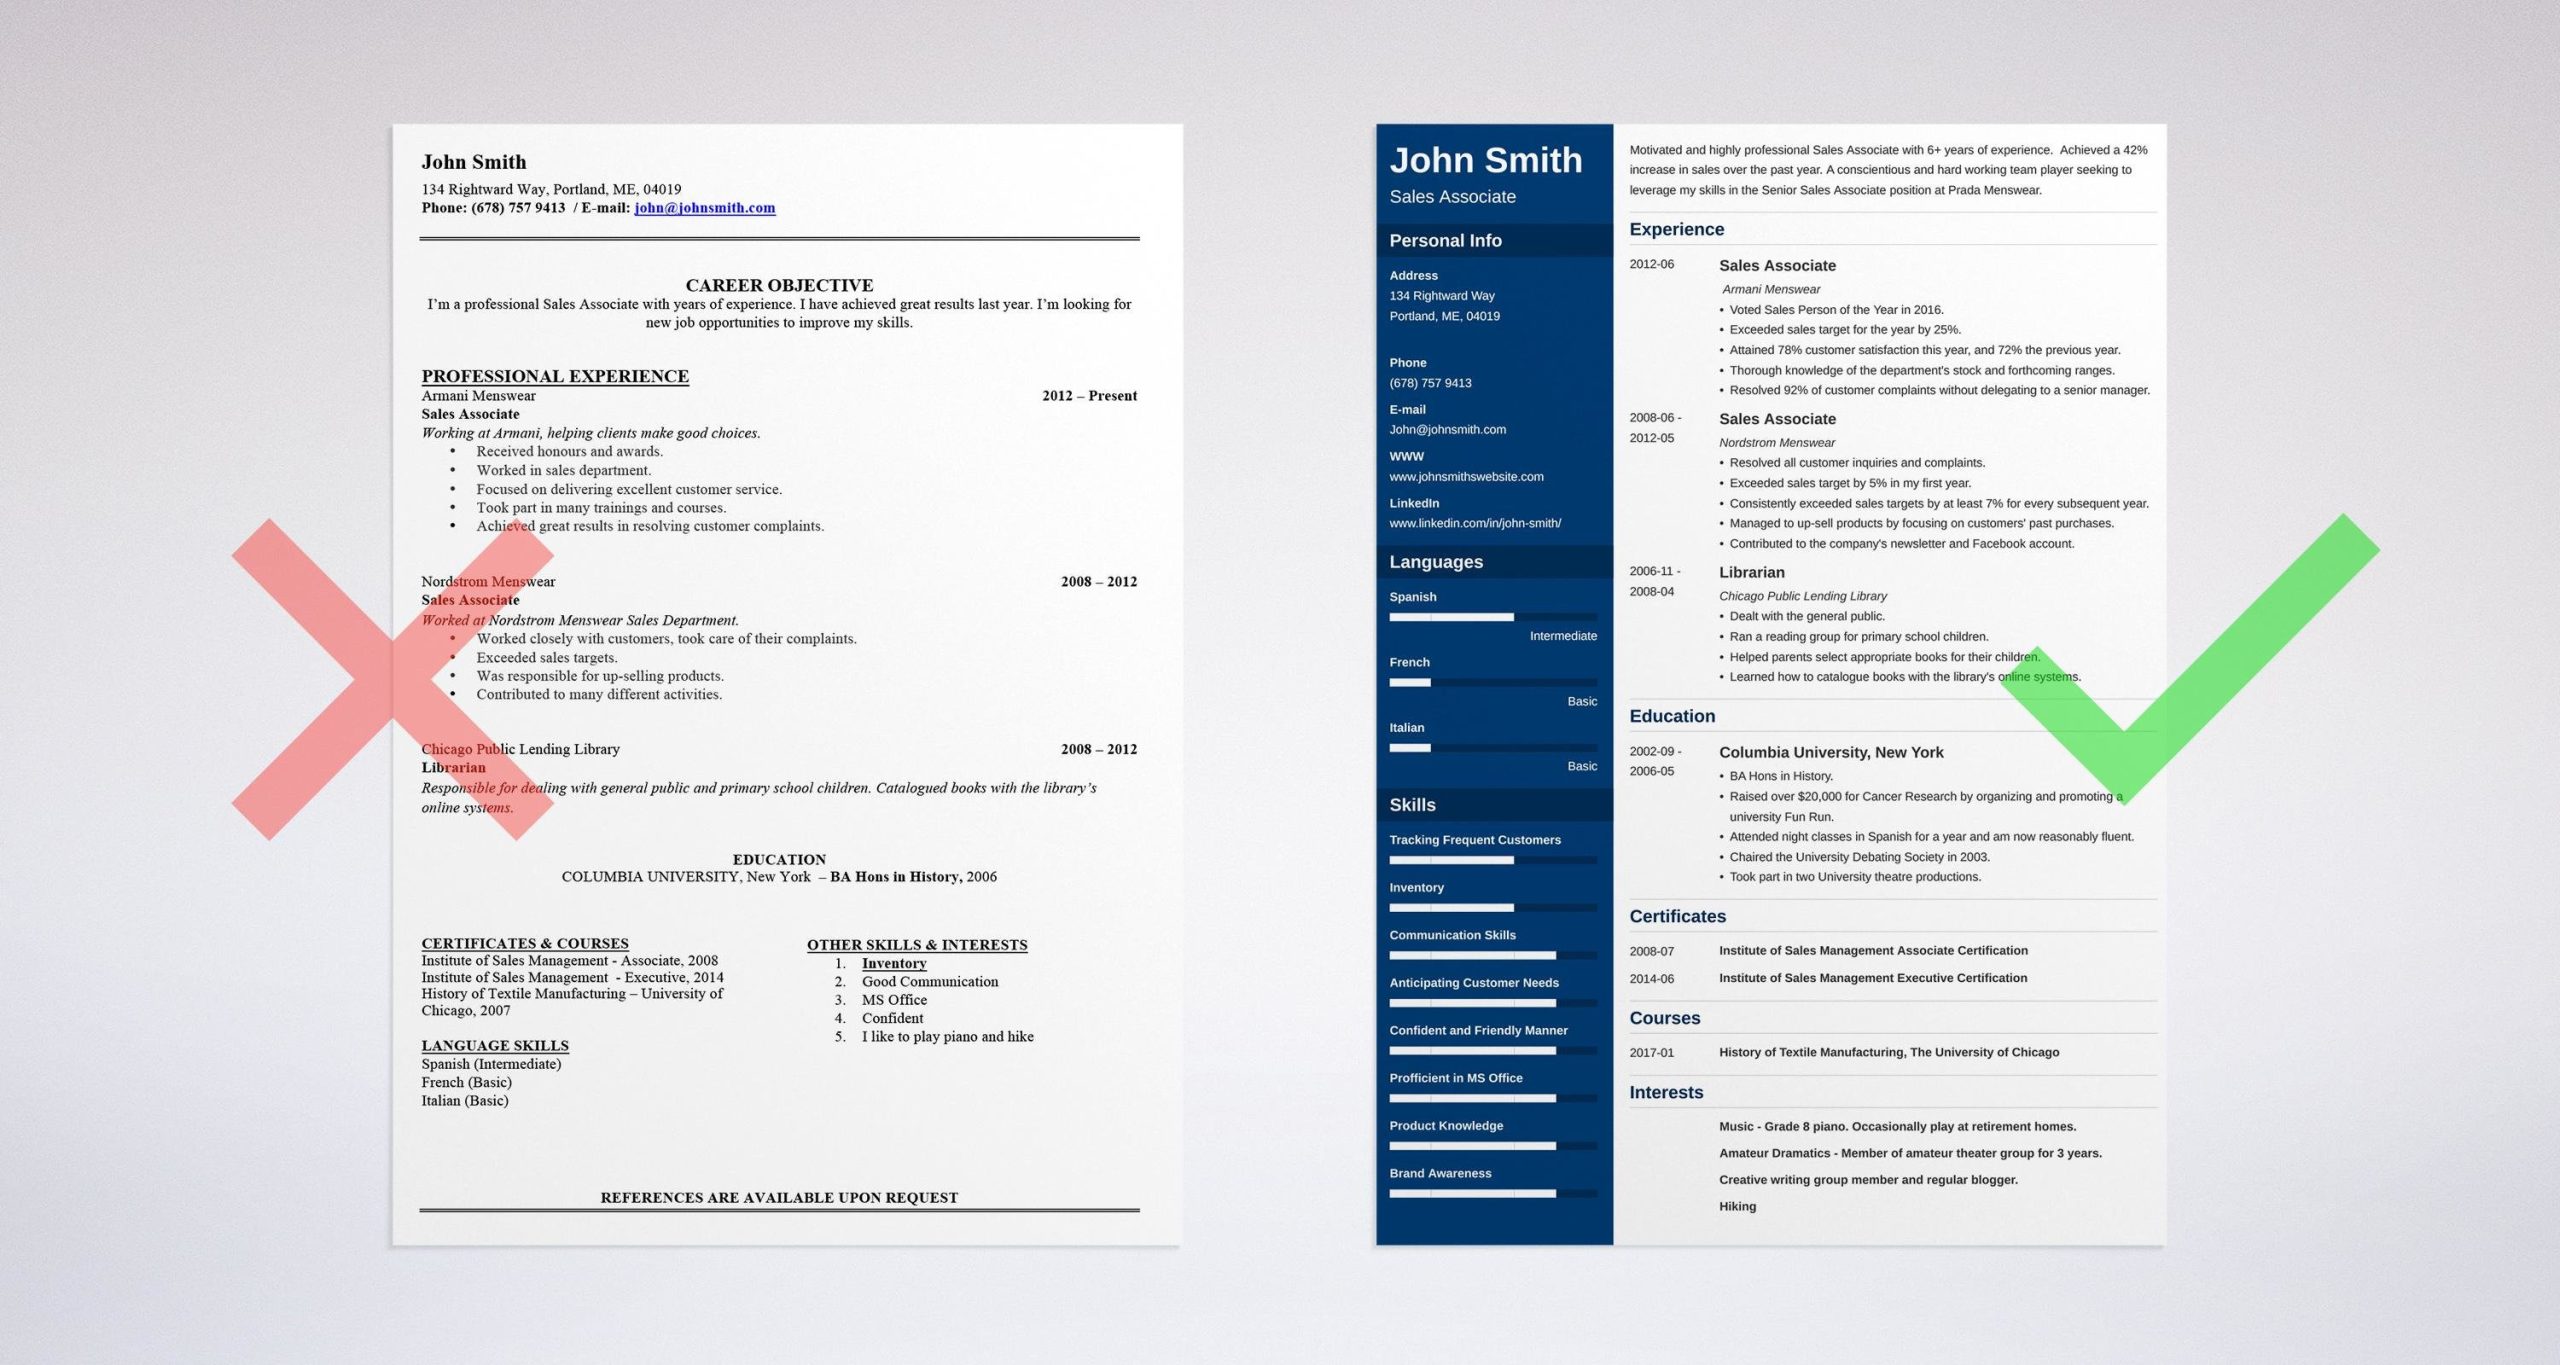 Entry Level Retail Sales associate Resume Sample Sales associate Resume [example   Job Description]